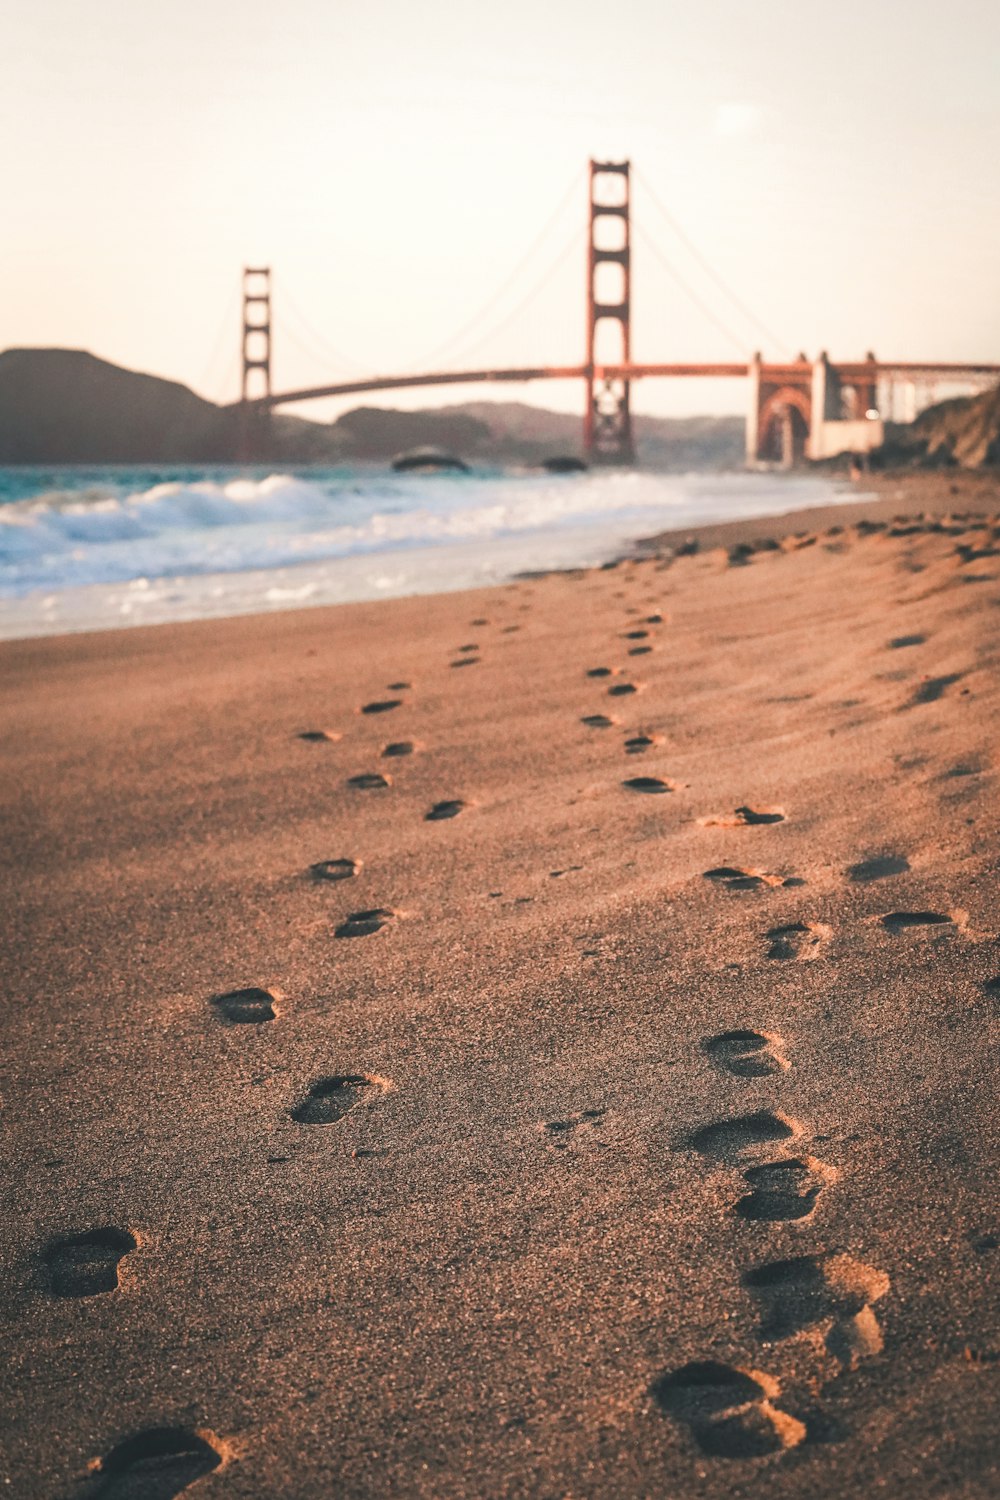 footprints on sand near Golden Gate Bridge